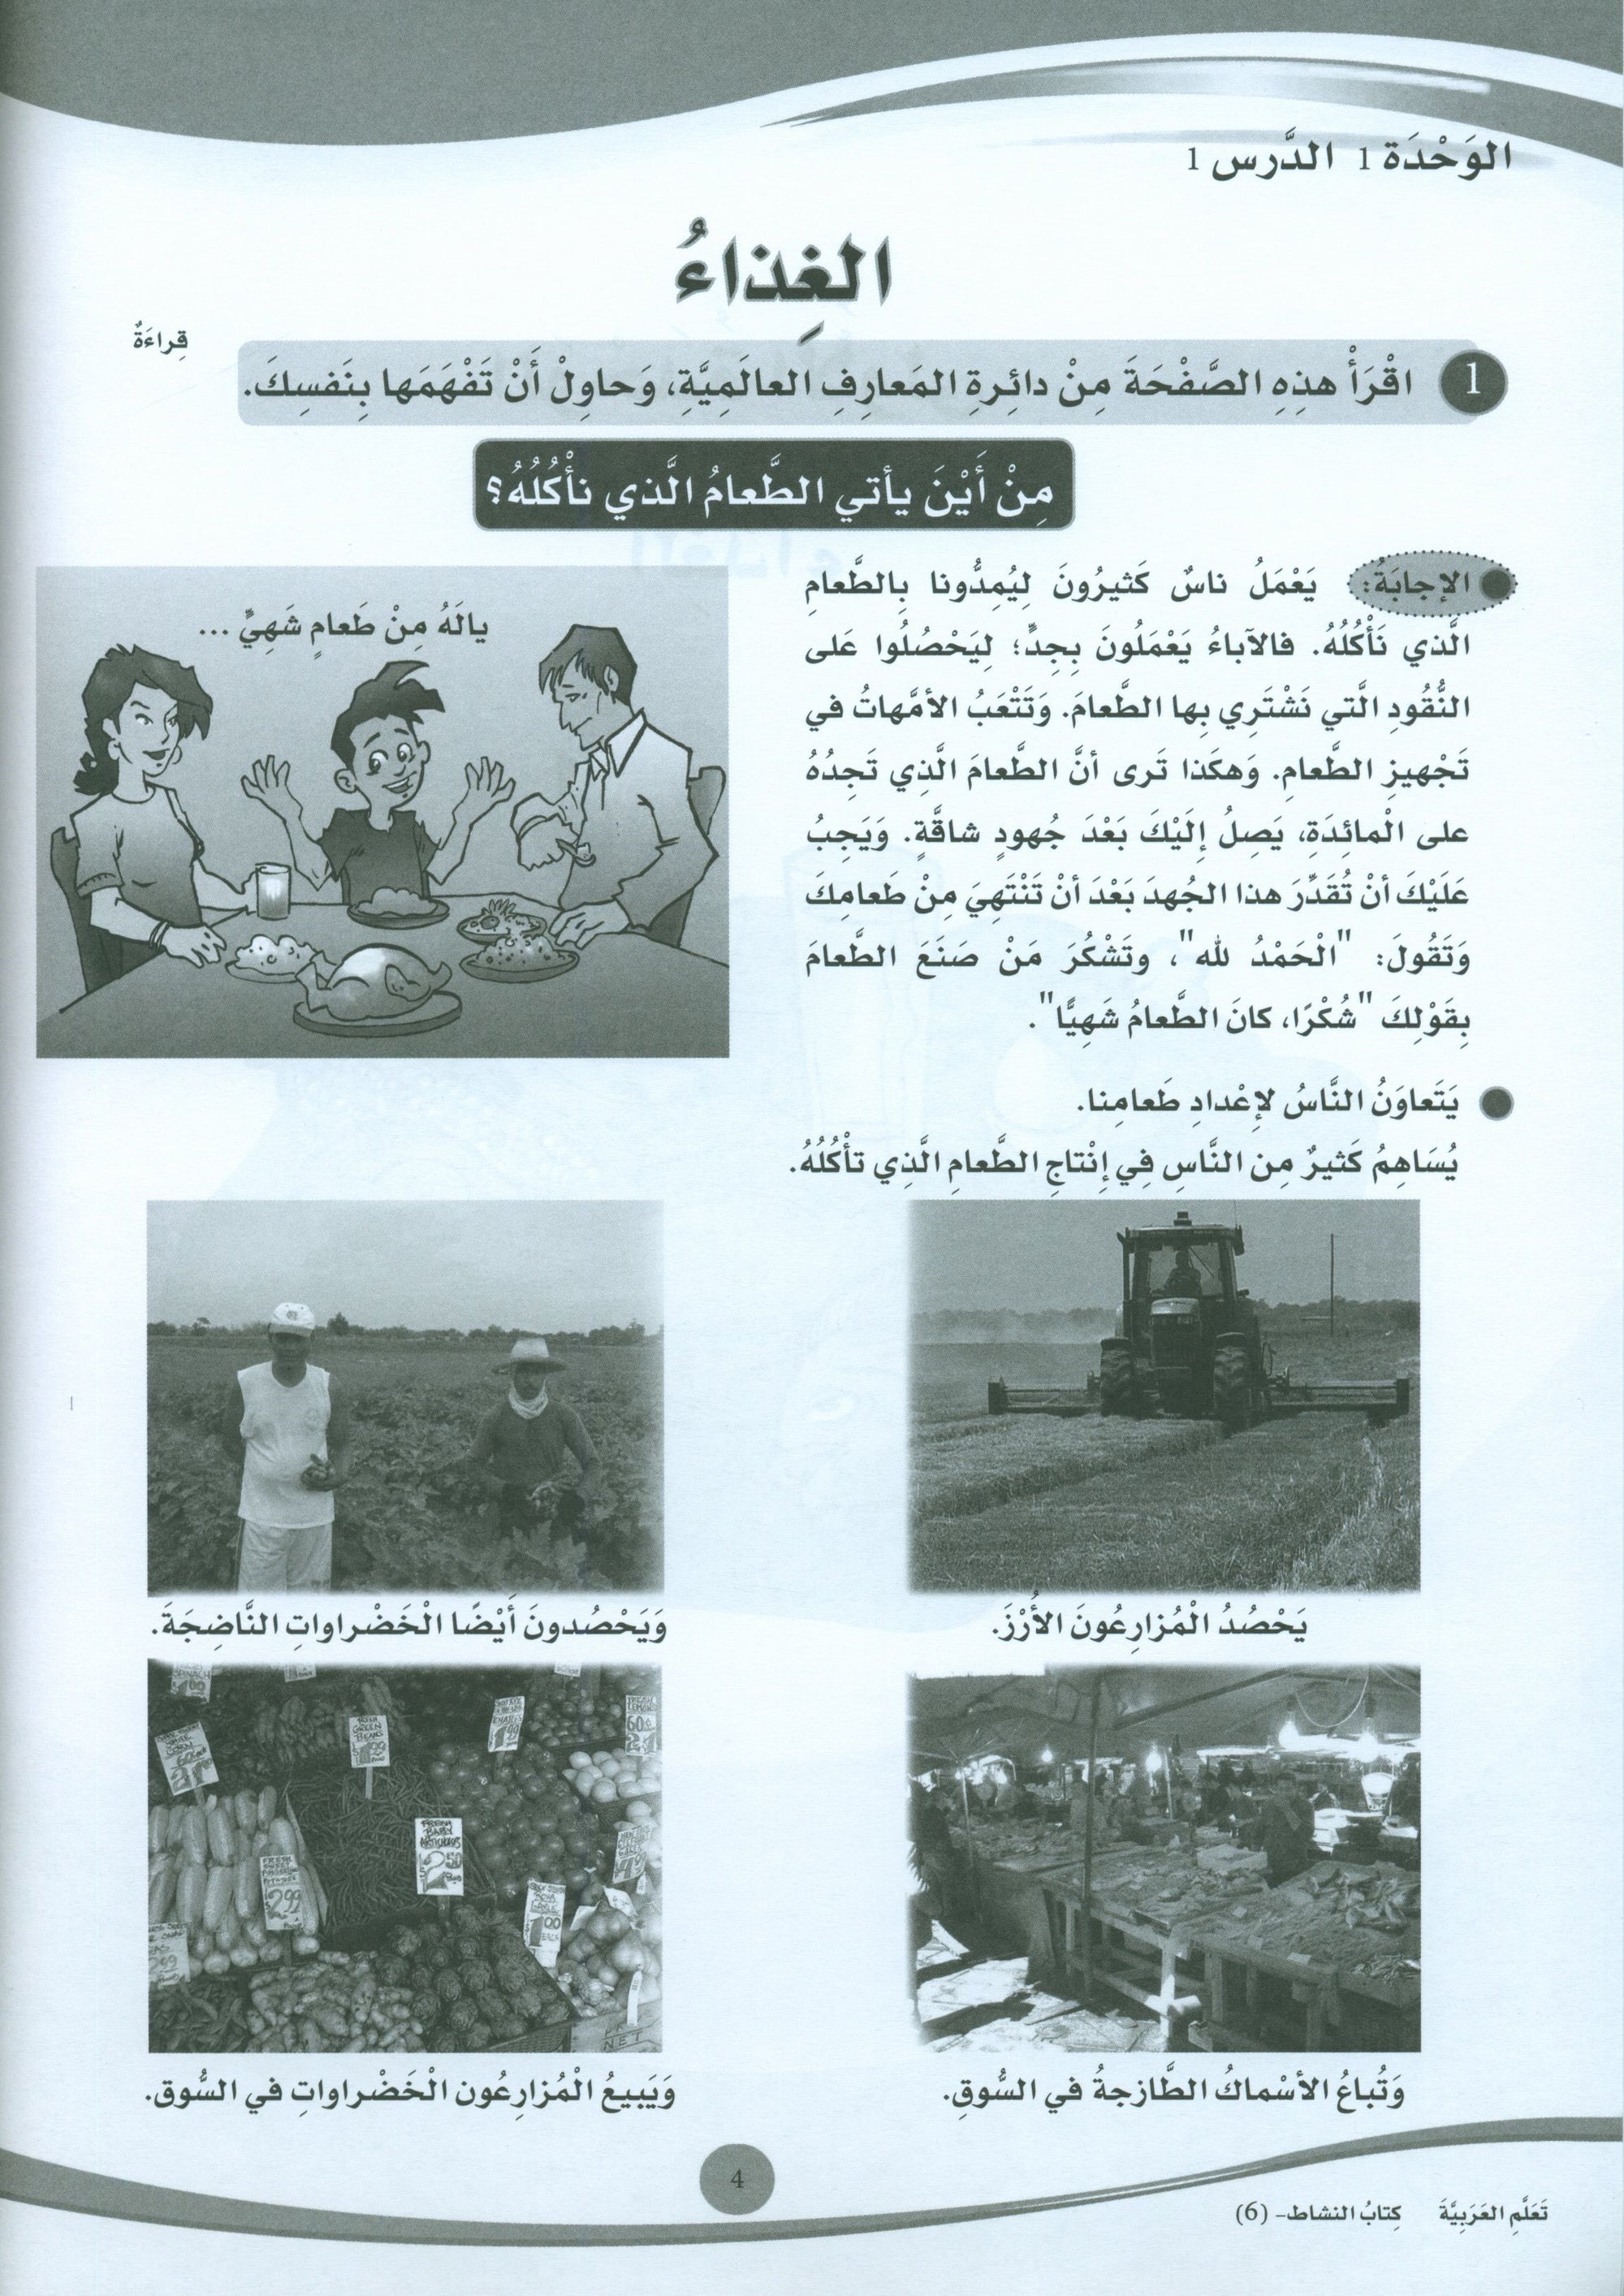 ICO Learn Arabic Workbook Level 6 (Combined Edition) تعلم العربية كتاب النشاط